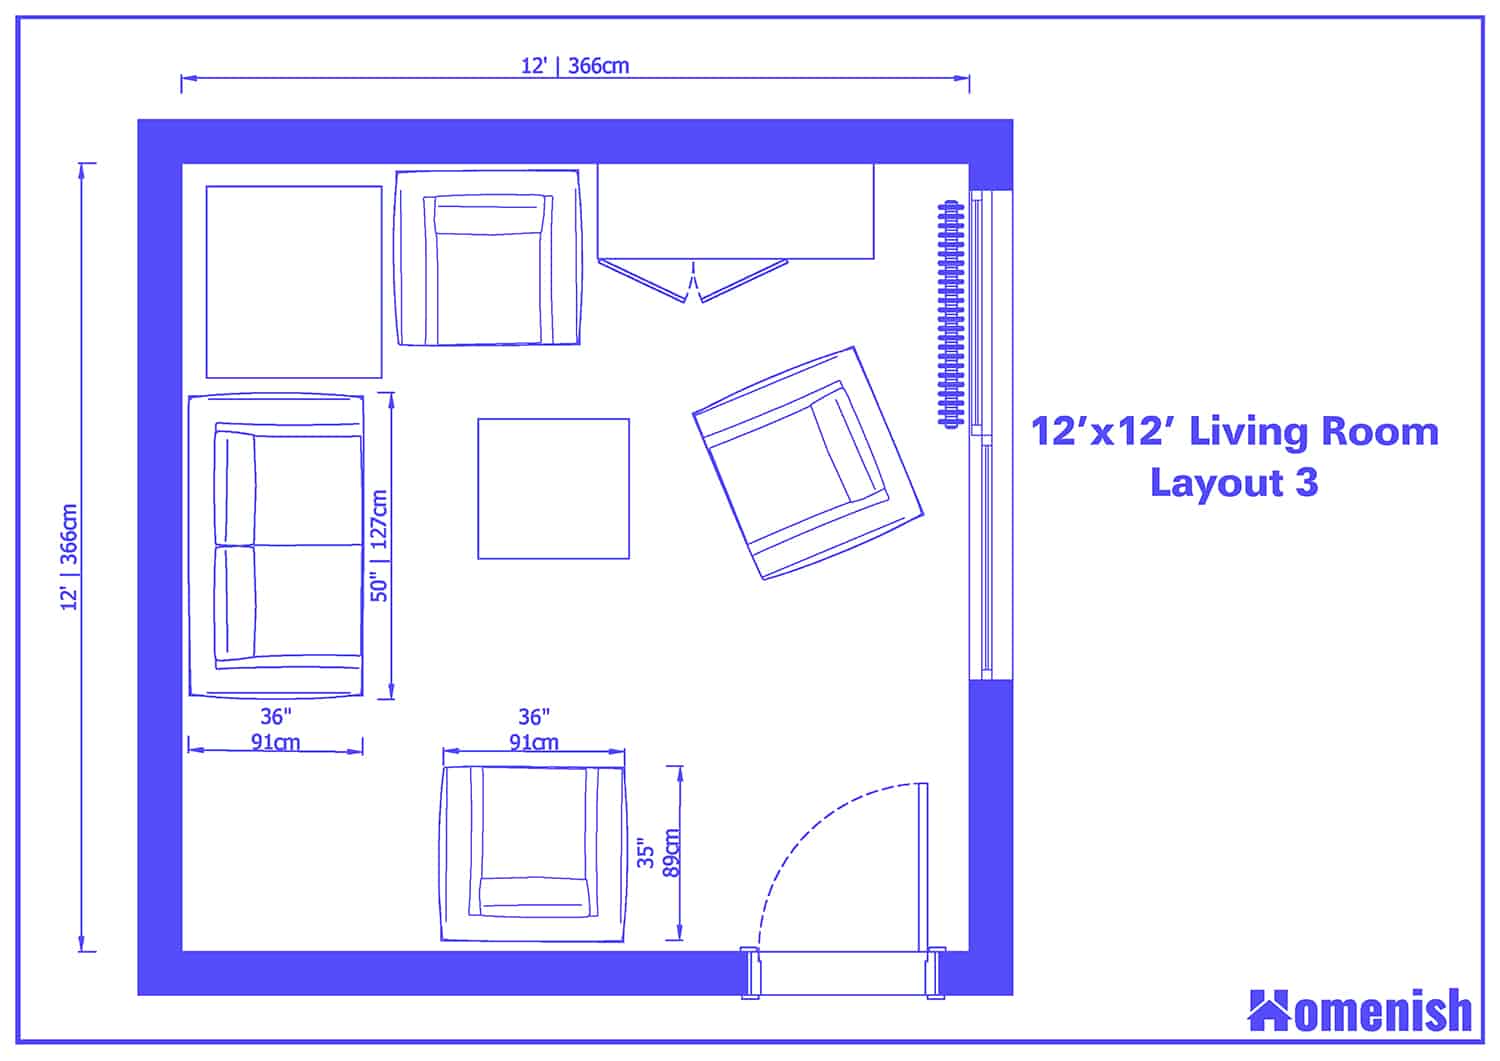 4m X 4m Living Room Layout